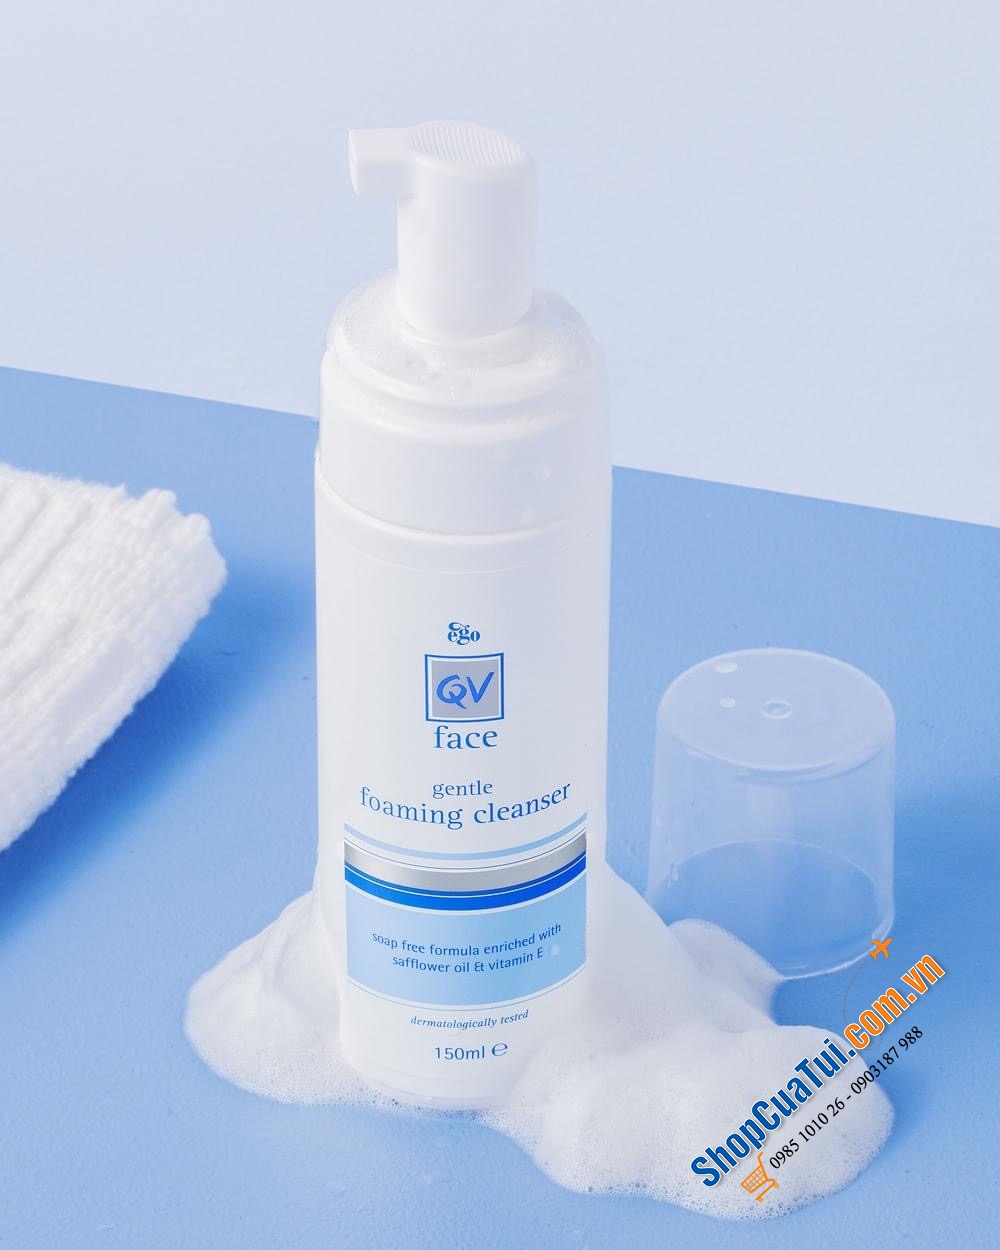 Sữa rửa mặt QV Face Gentle Foaming Cleanser 150Ml - dạng foaming chứa Safflower oil, thích hợp cho da khô, da nhạy cảm, da mỏng dễ bị dị ứng, mẩn đỏ